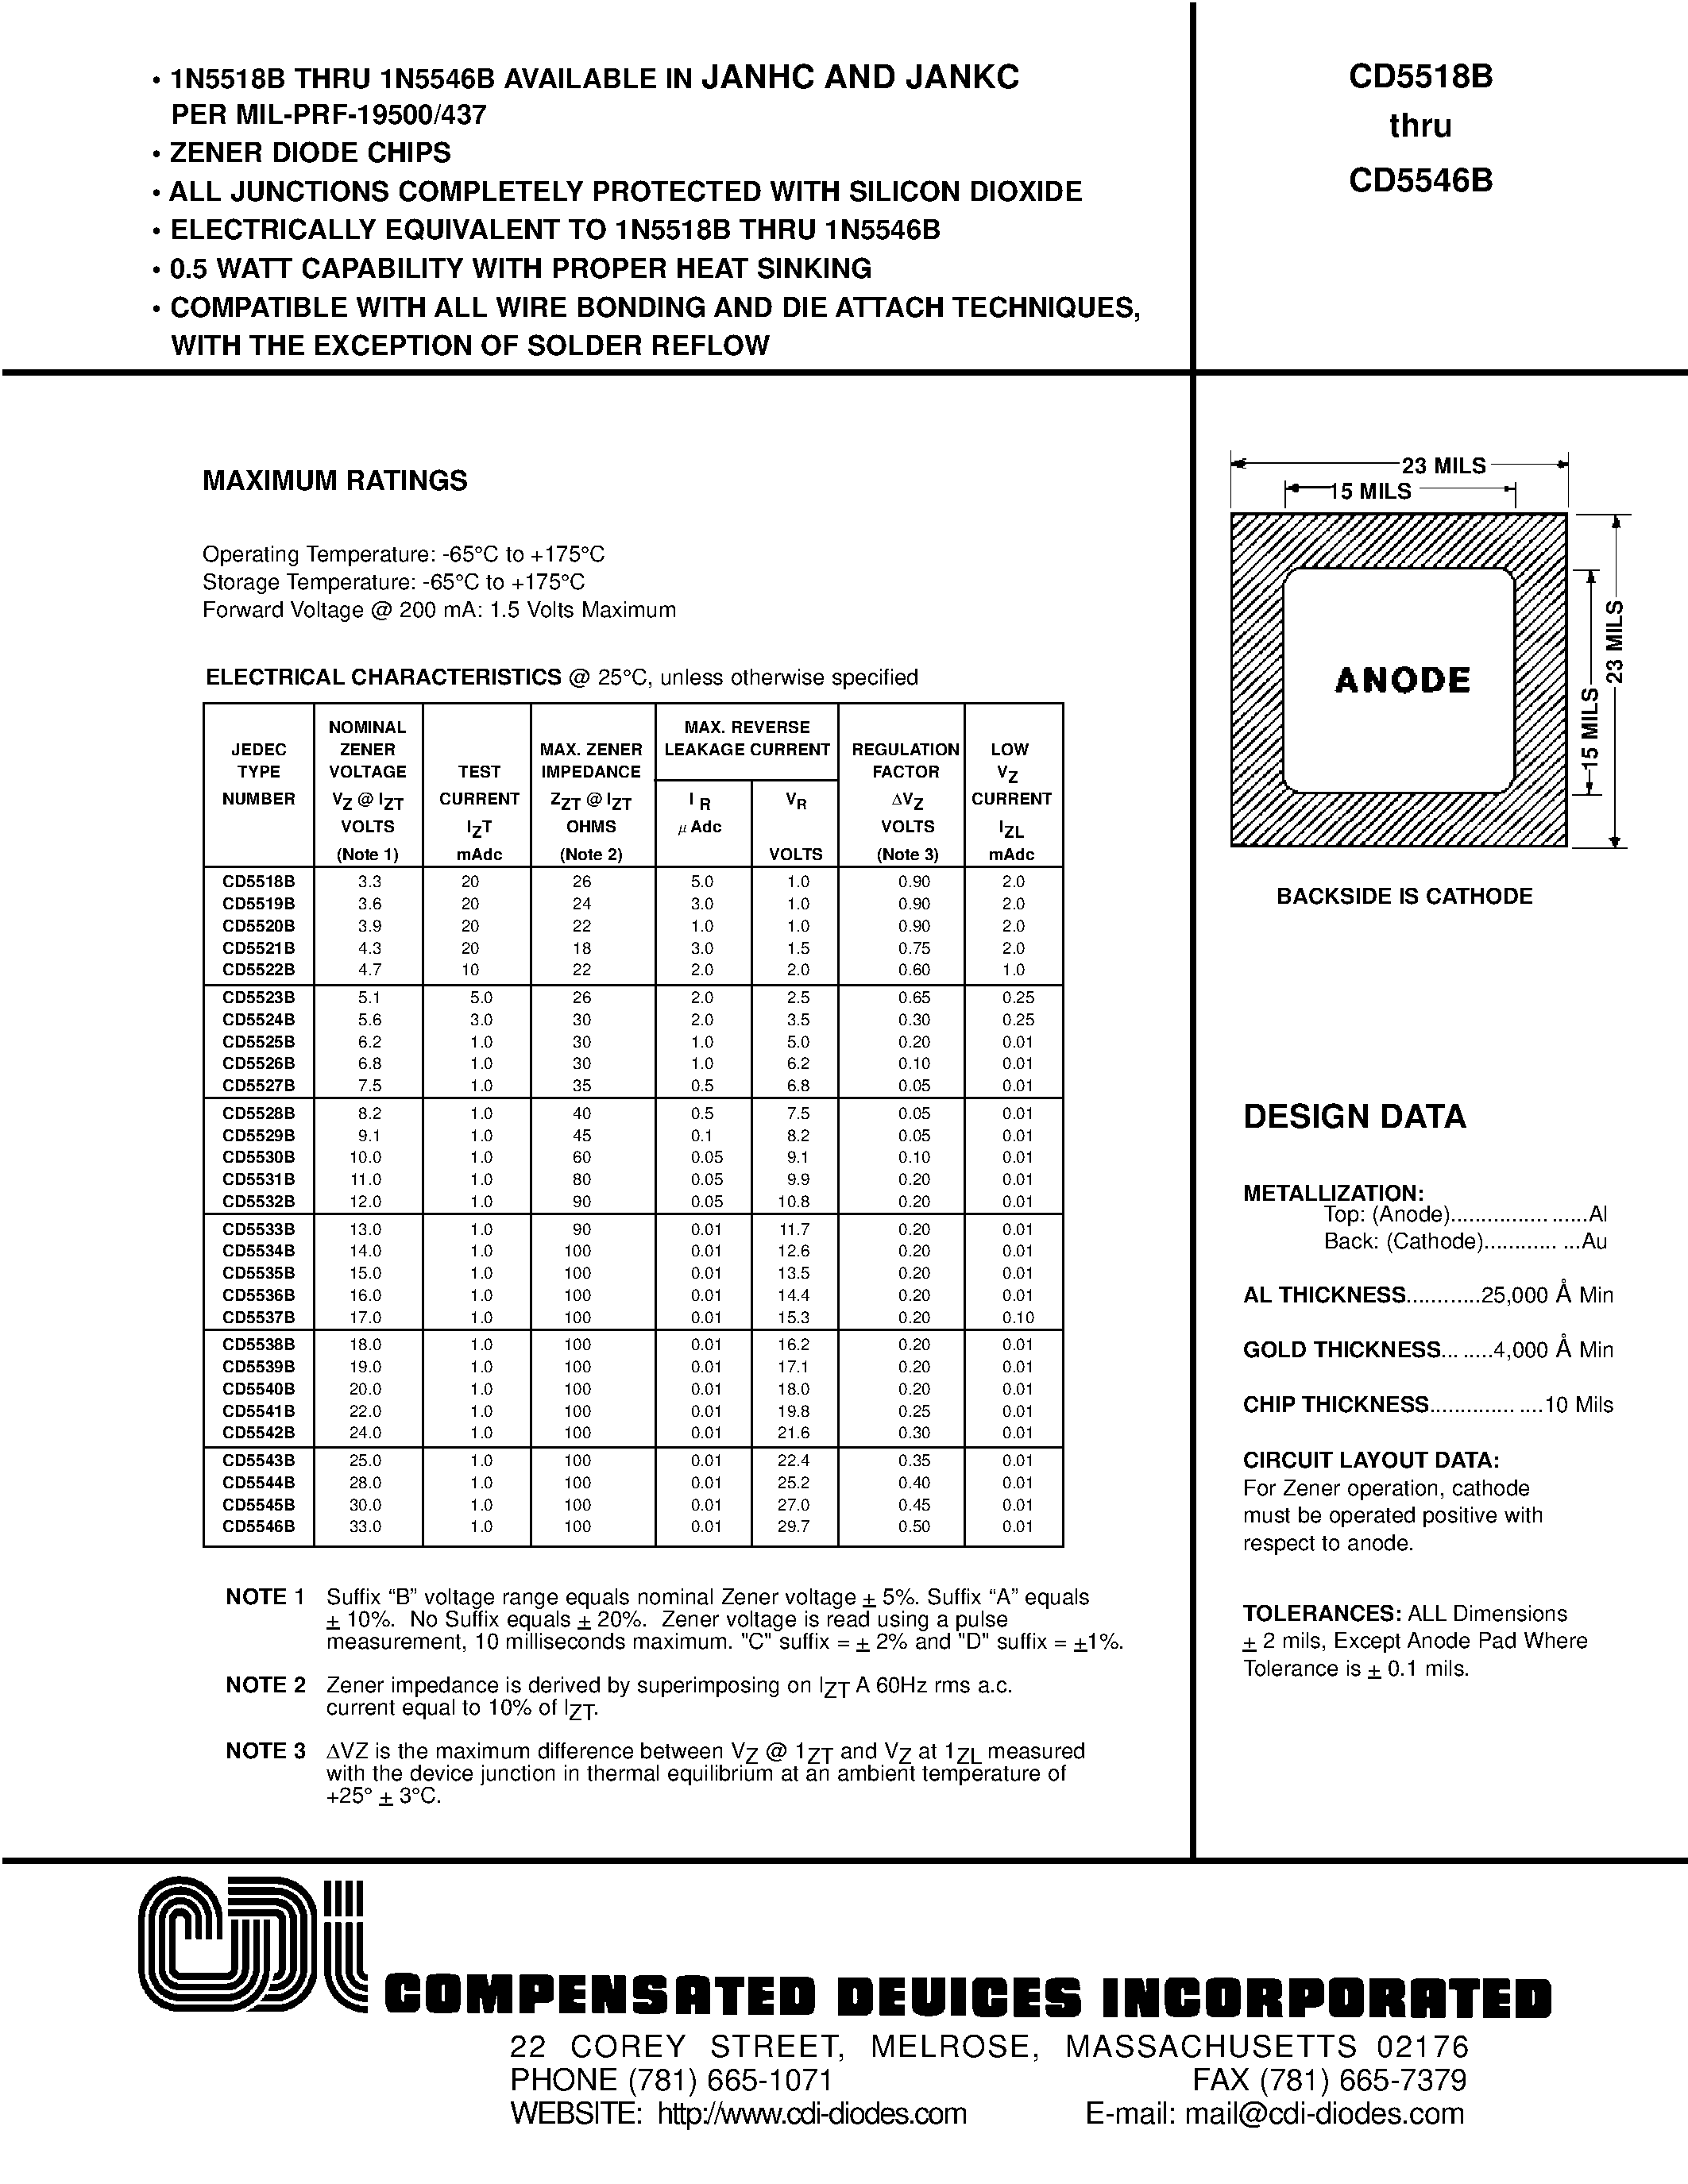 Datasheet CD5528B - ZENER DIODE CHIPS page 1